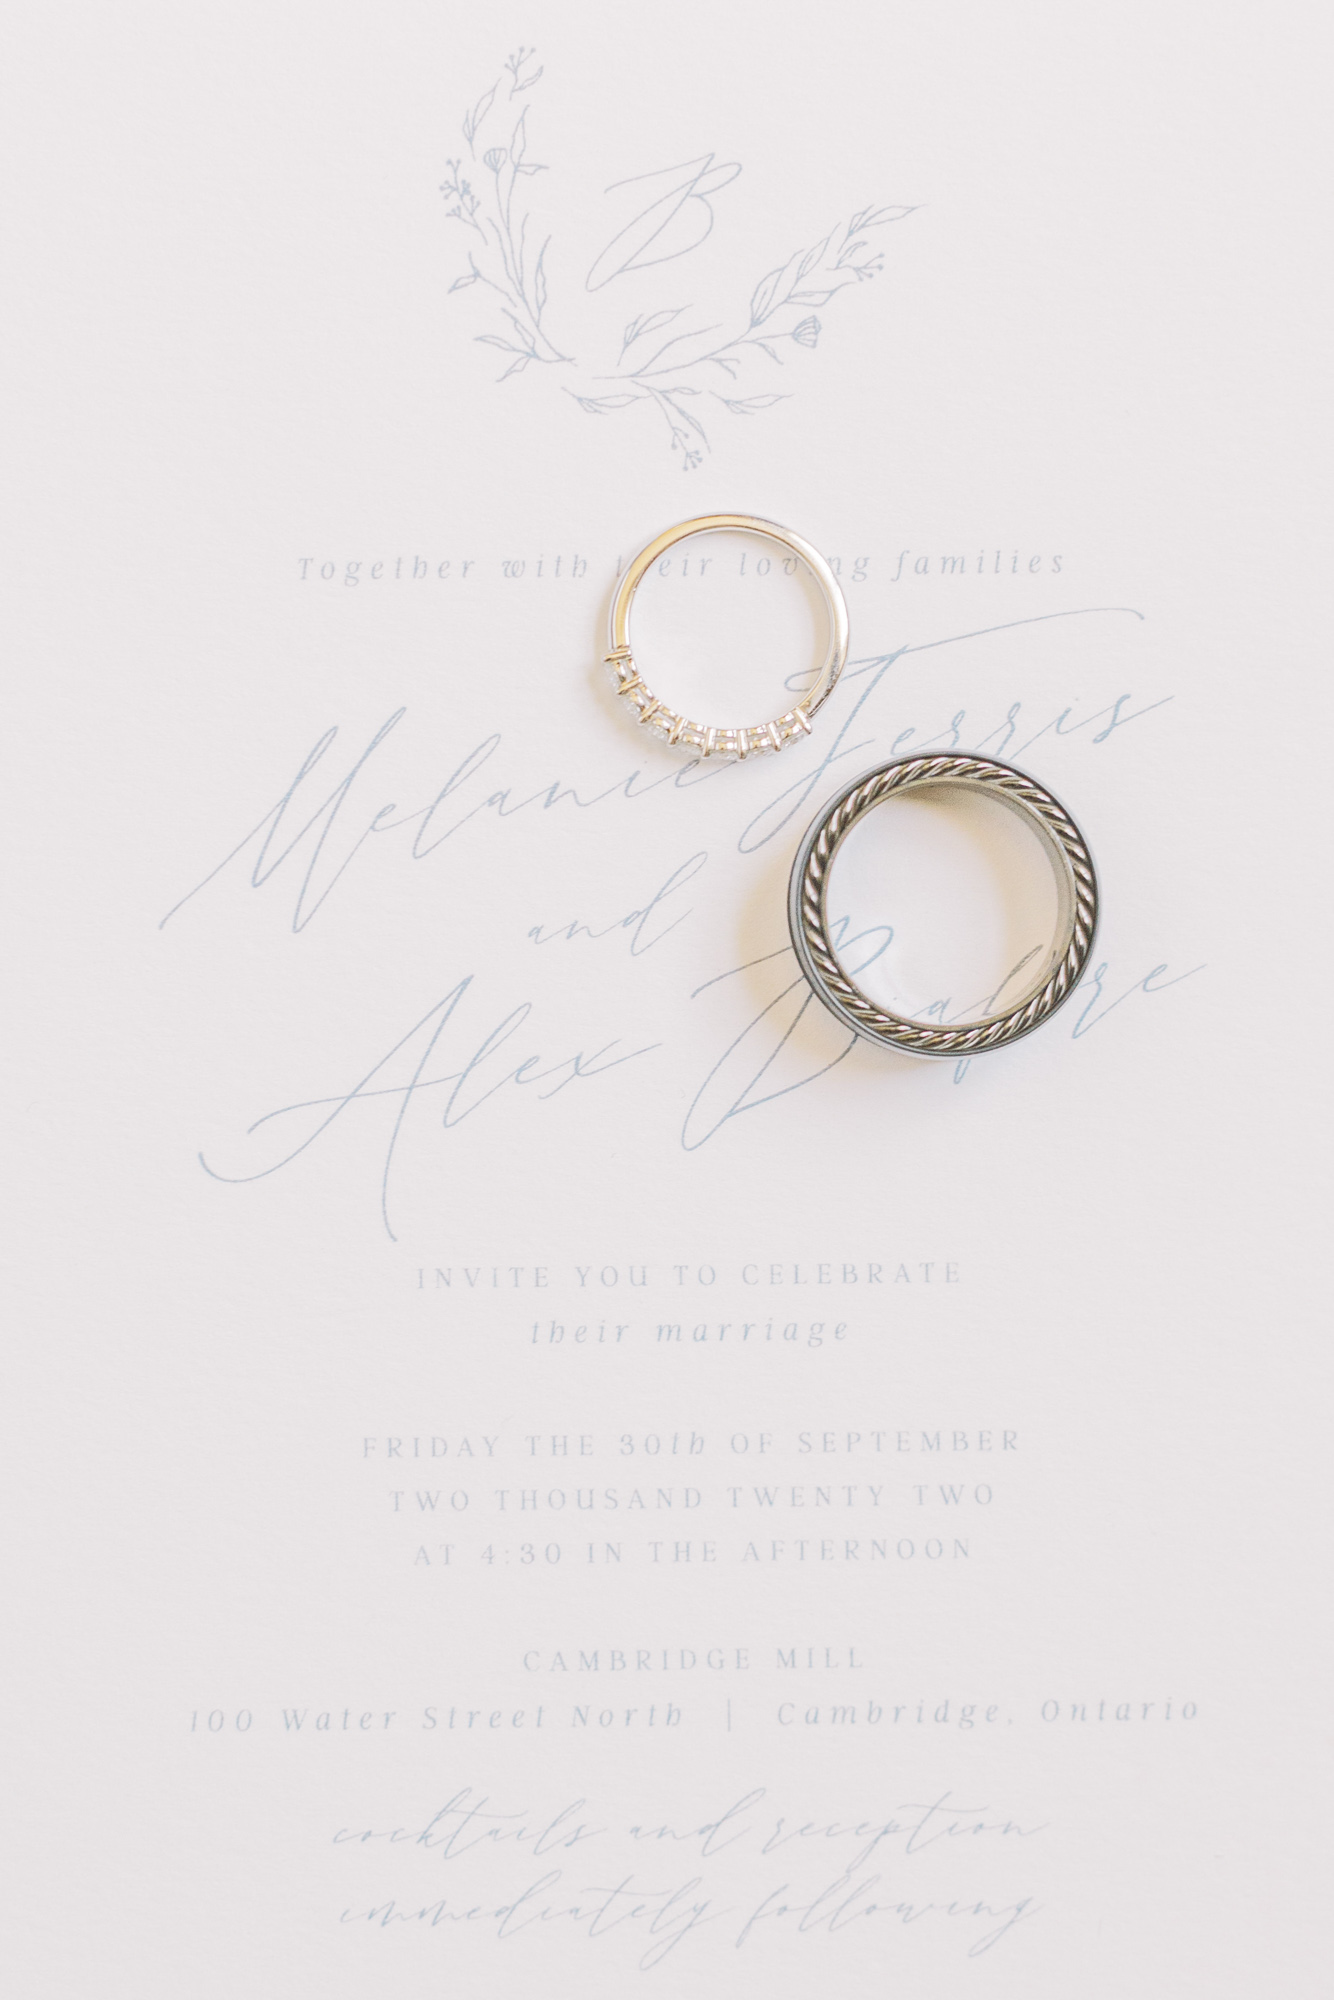 Wedding invitation with wedding rings taken by Toronto Wedding Photographer Paula Visco